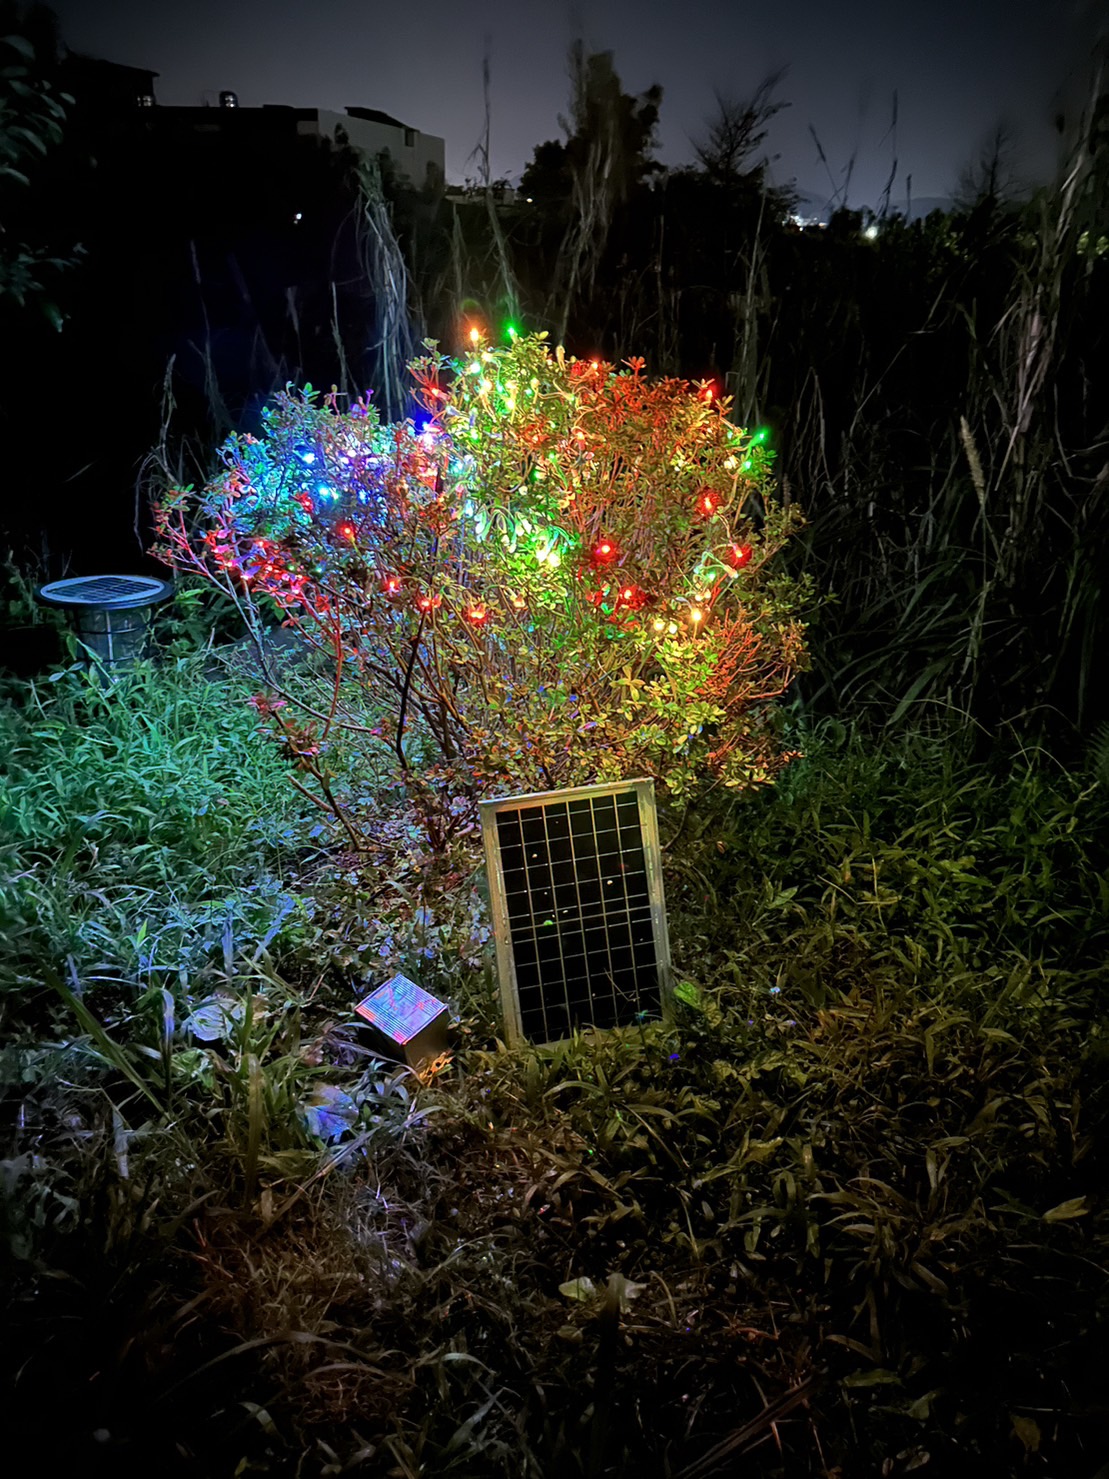 Solar Garden Light